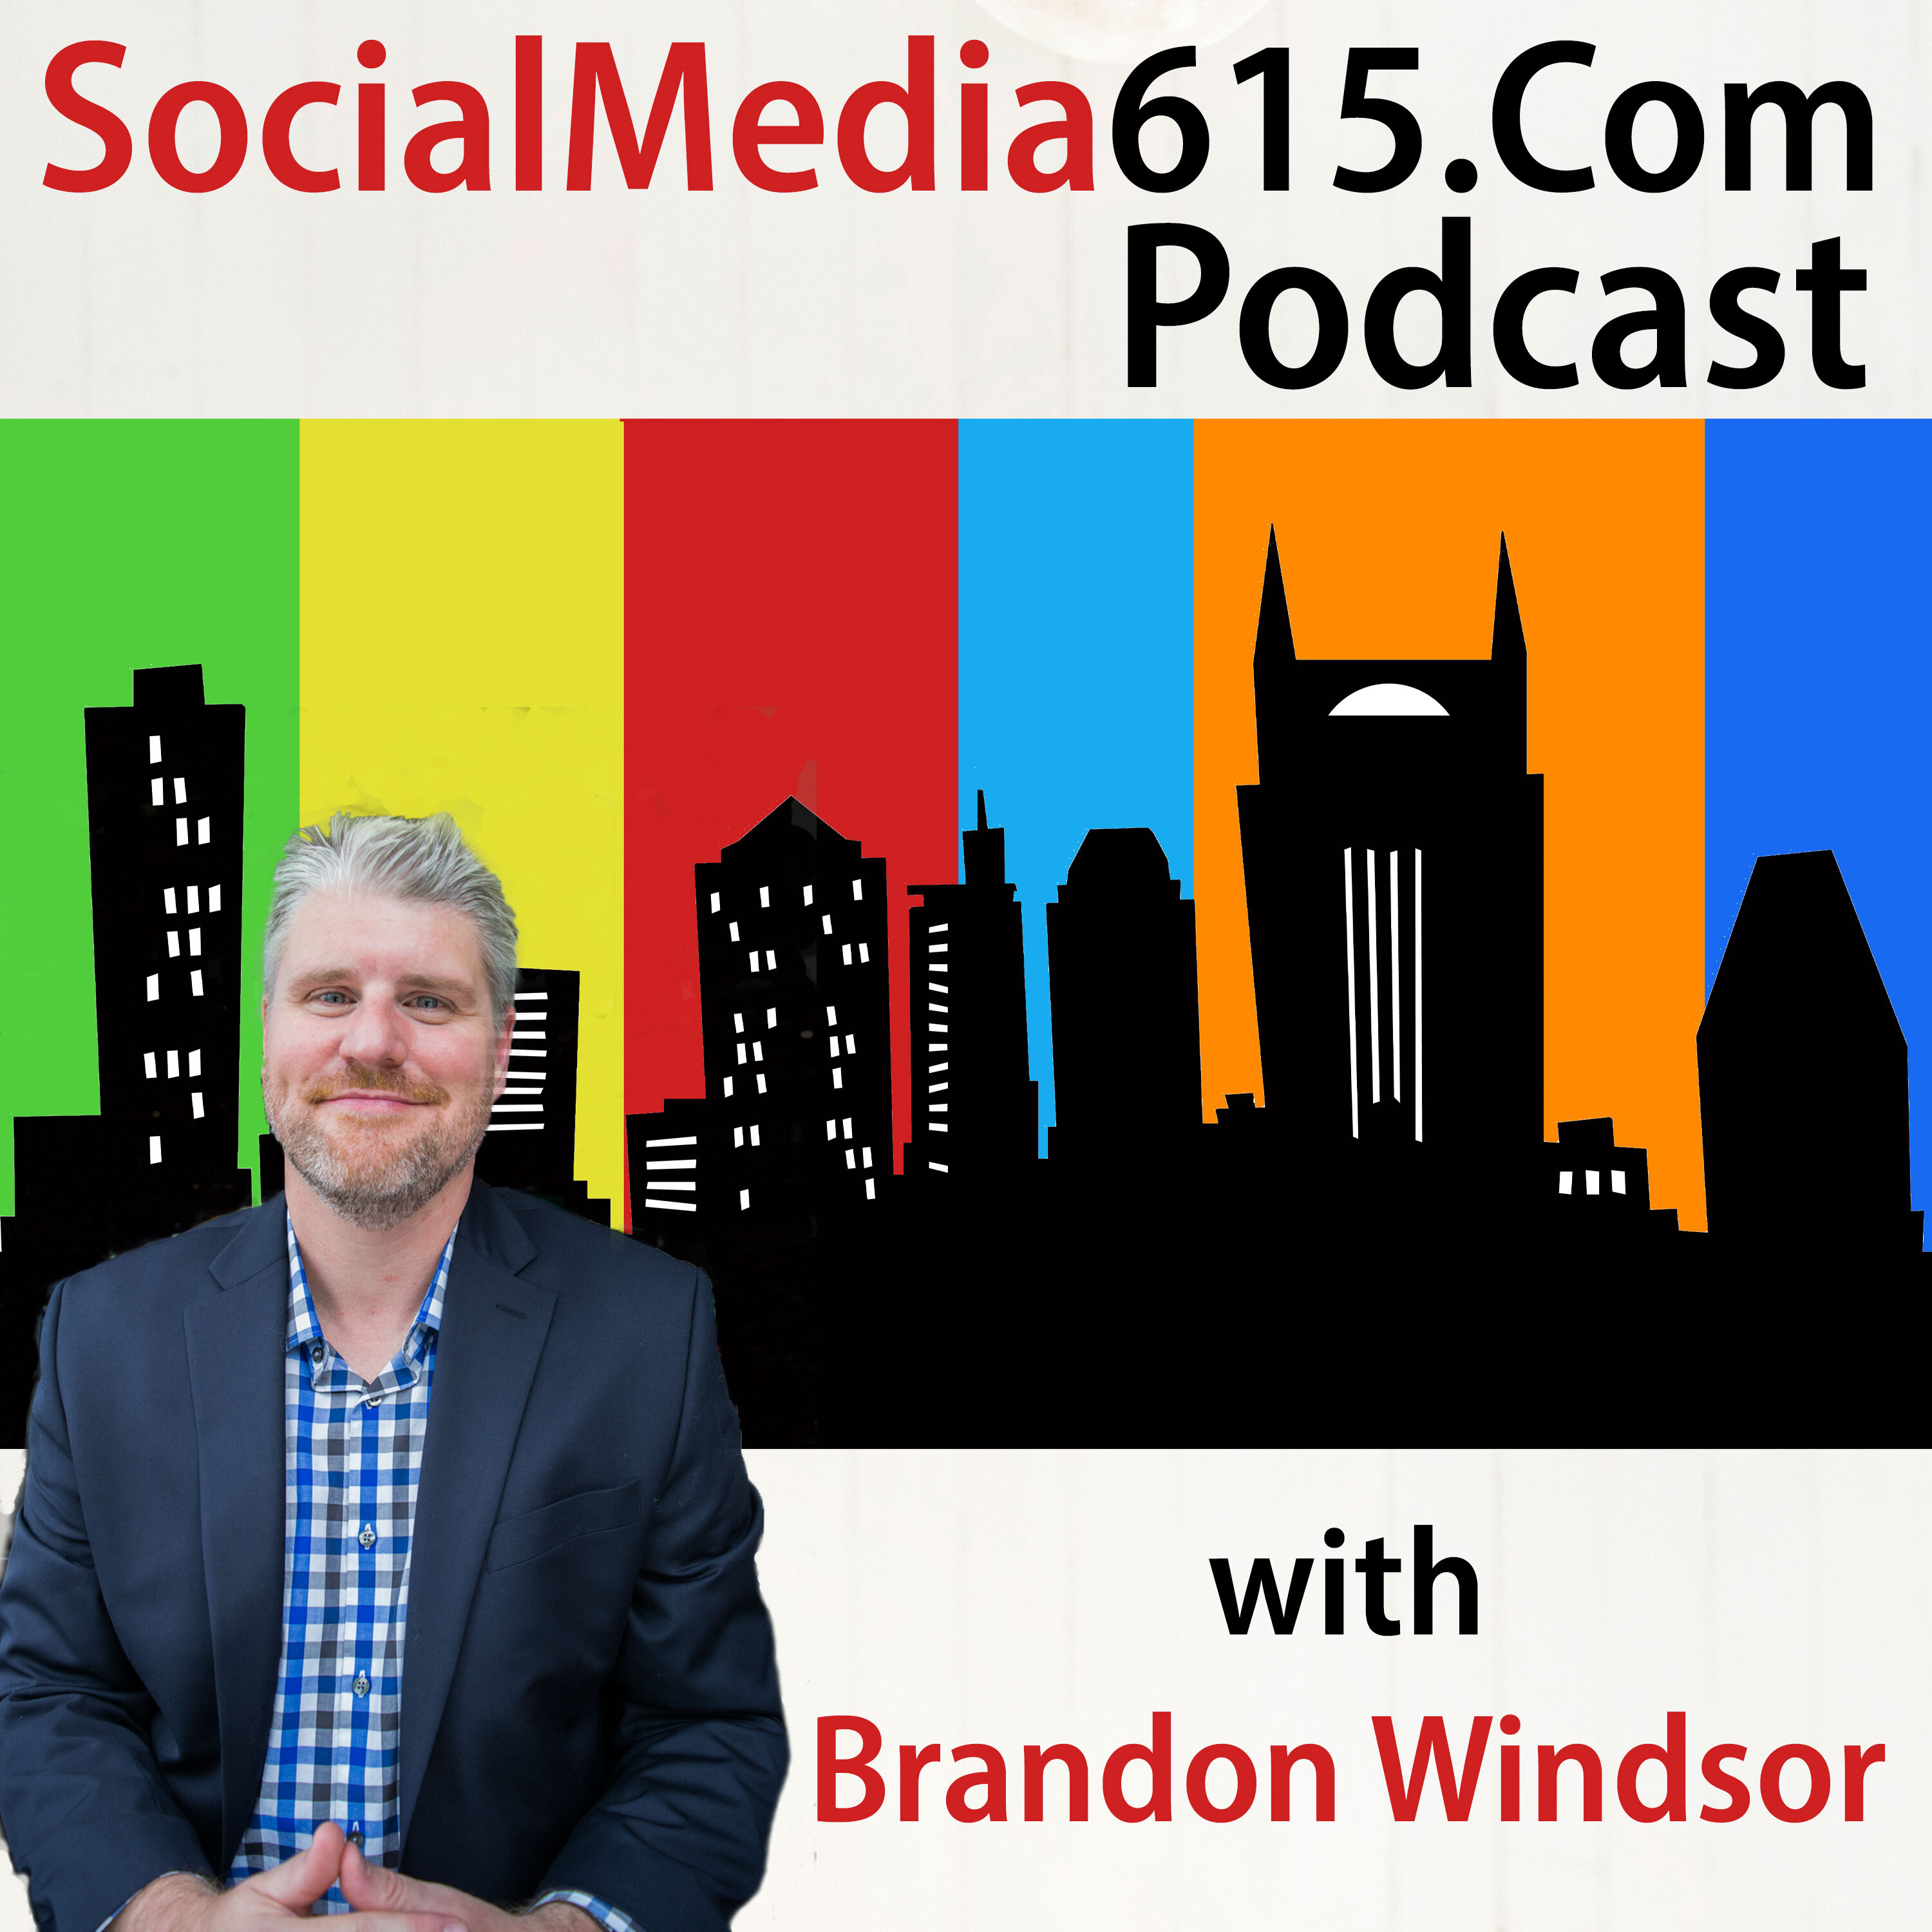 SocialMedia615.Com Podcast Episode 1: The 3 C's of Social Media Marketing